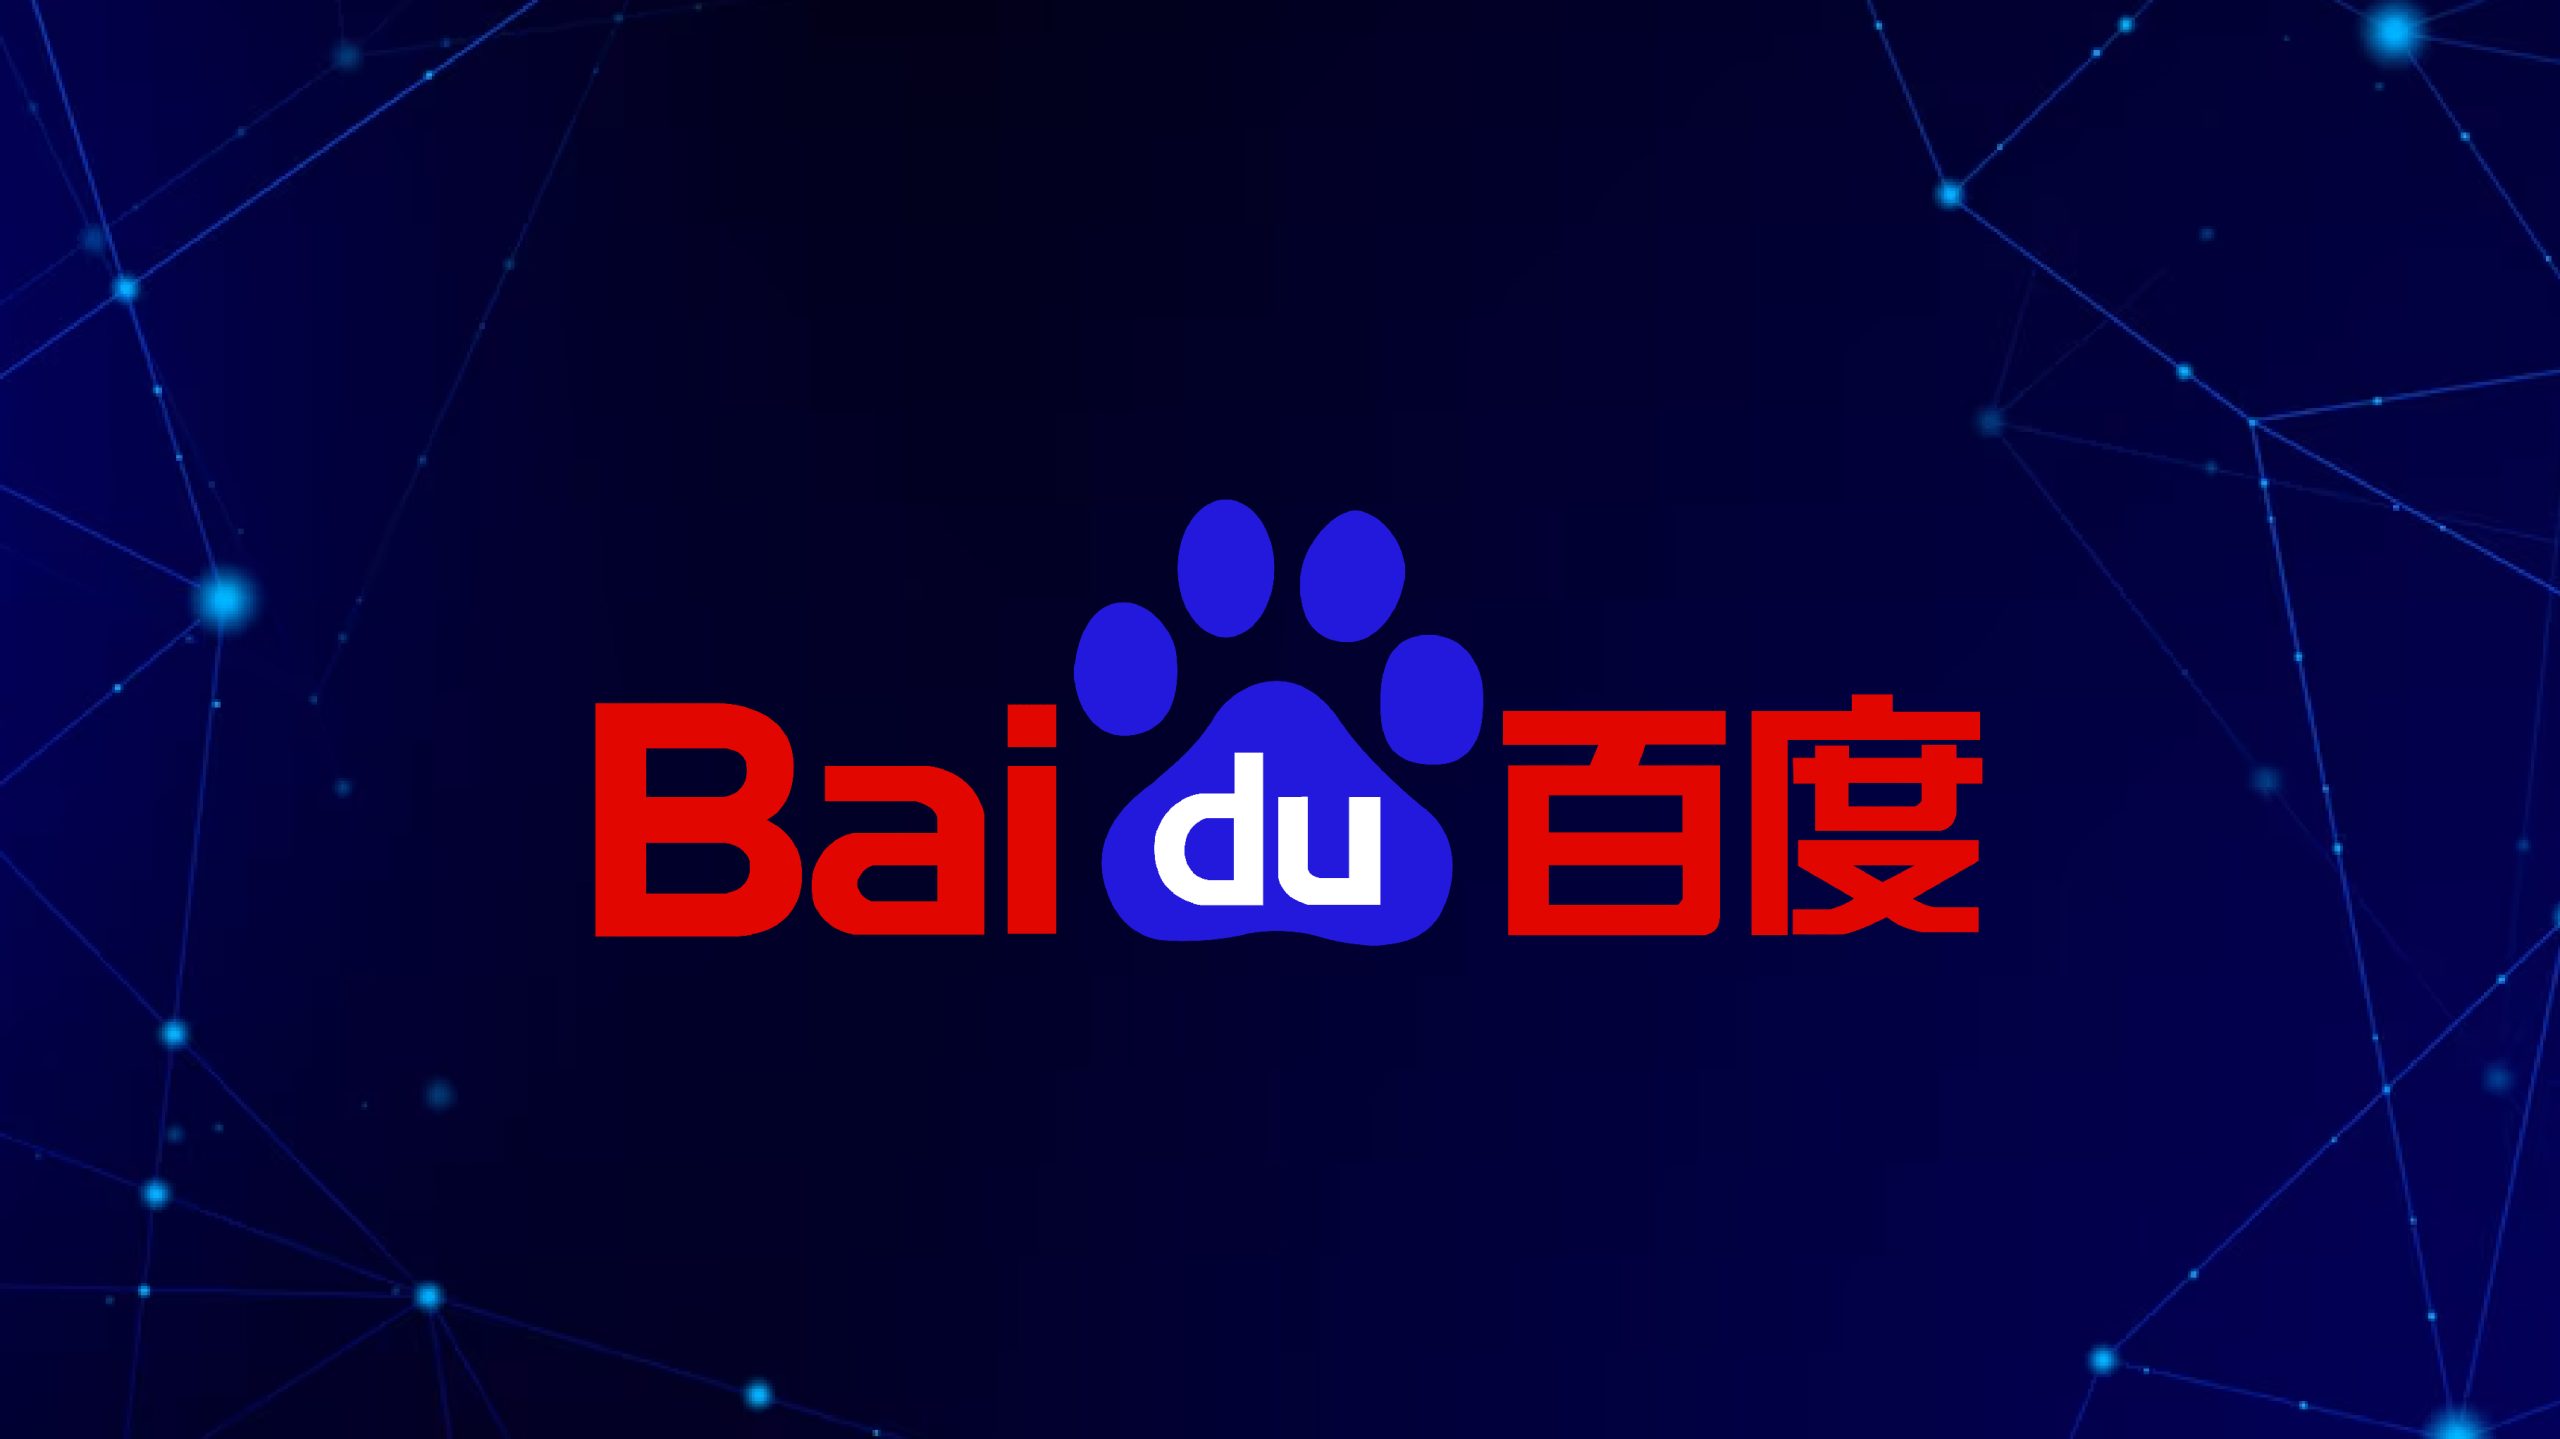 Alibaba and Baidu Rush to Upgrade Chatbots to Handle Longer Texts